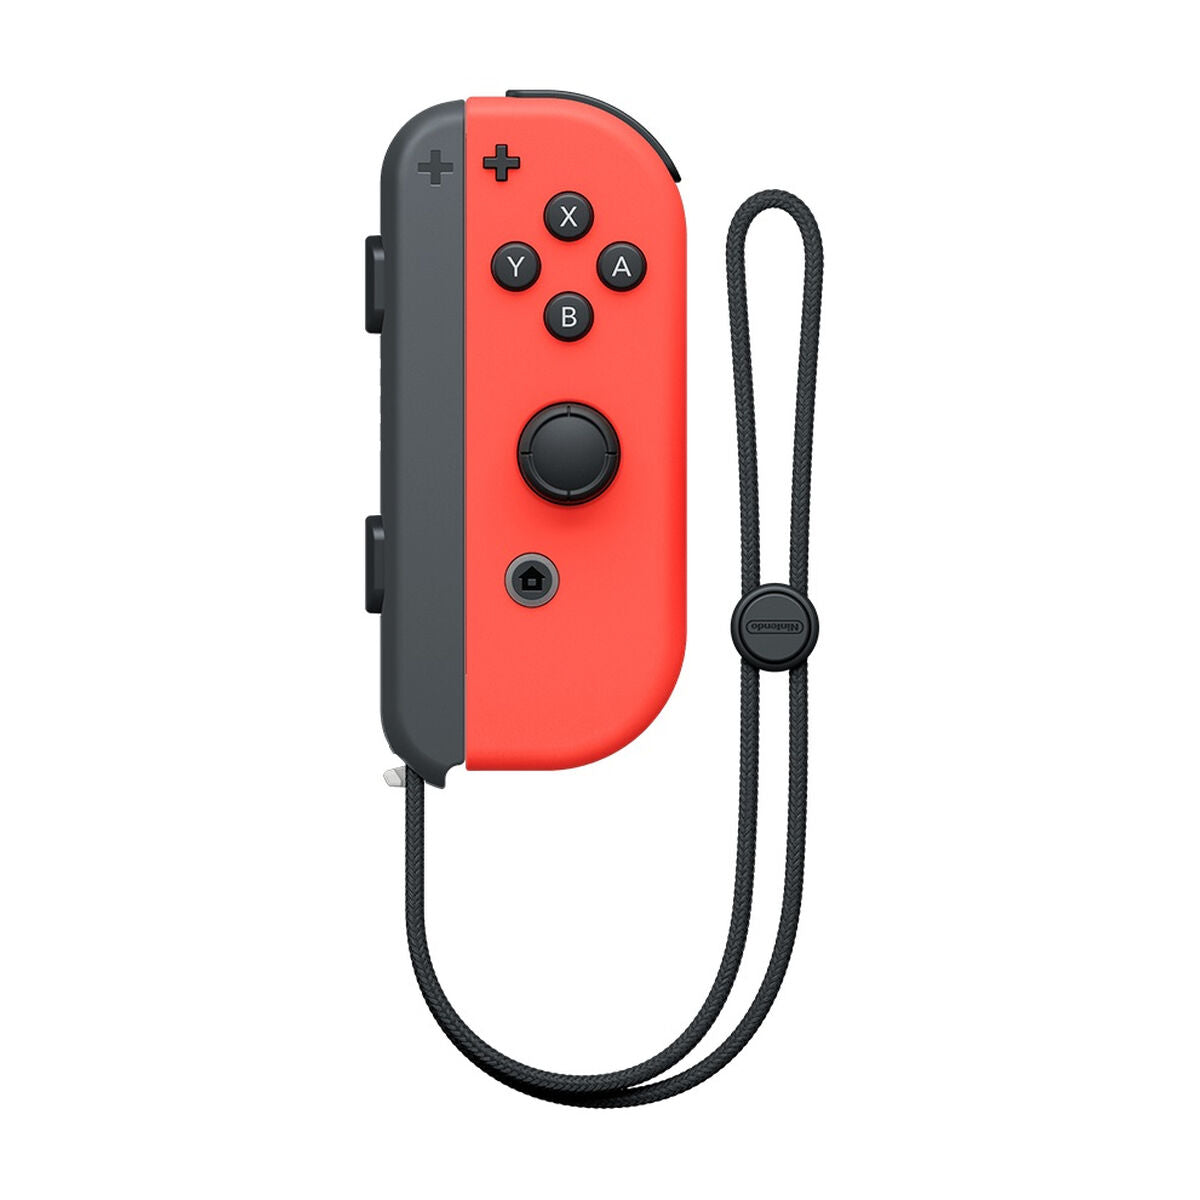 Pro Controller für Nintendo Switch + Nintendo USB-Kabel 10005493 Rot